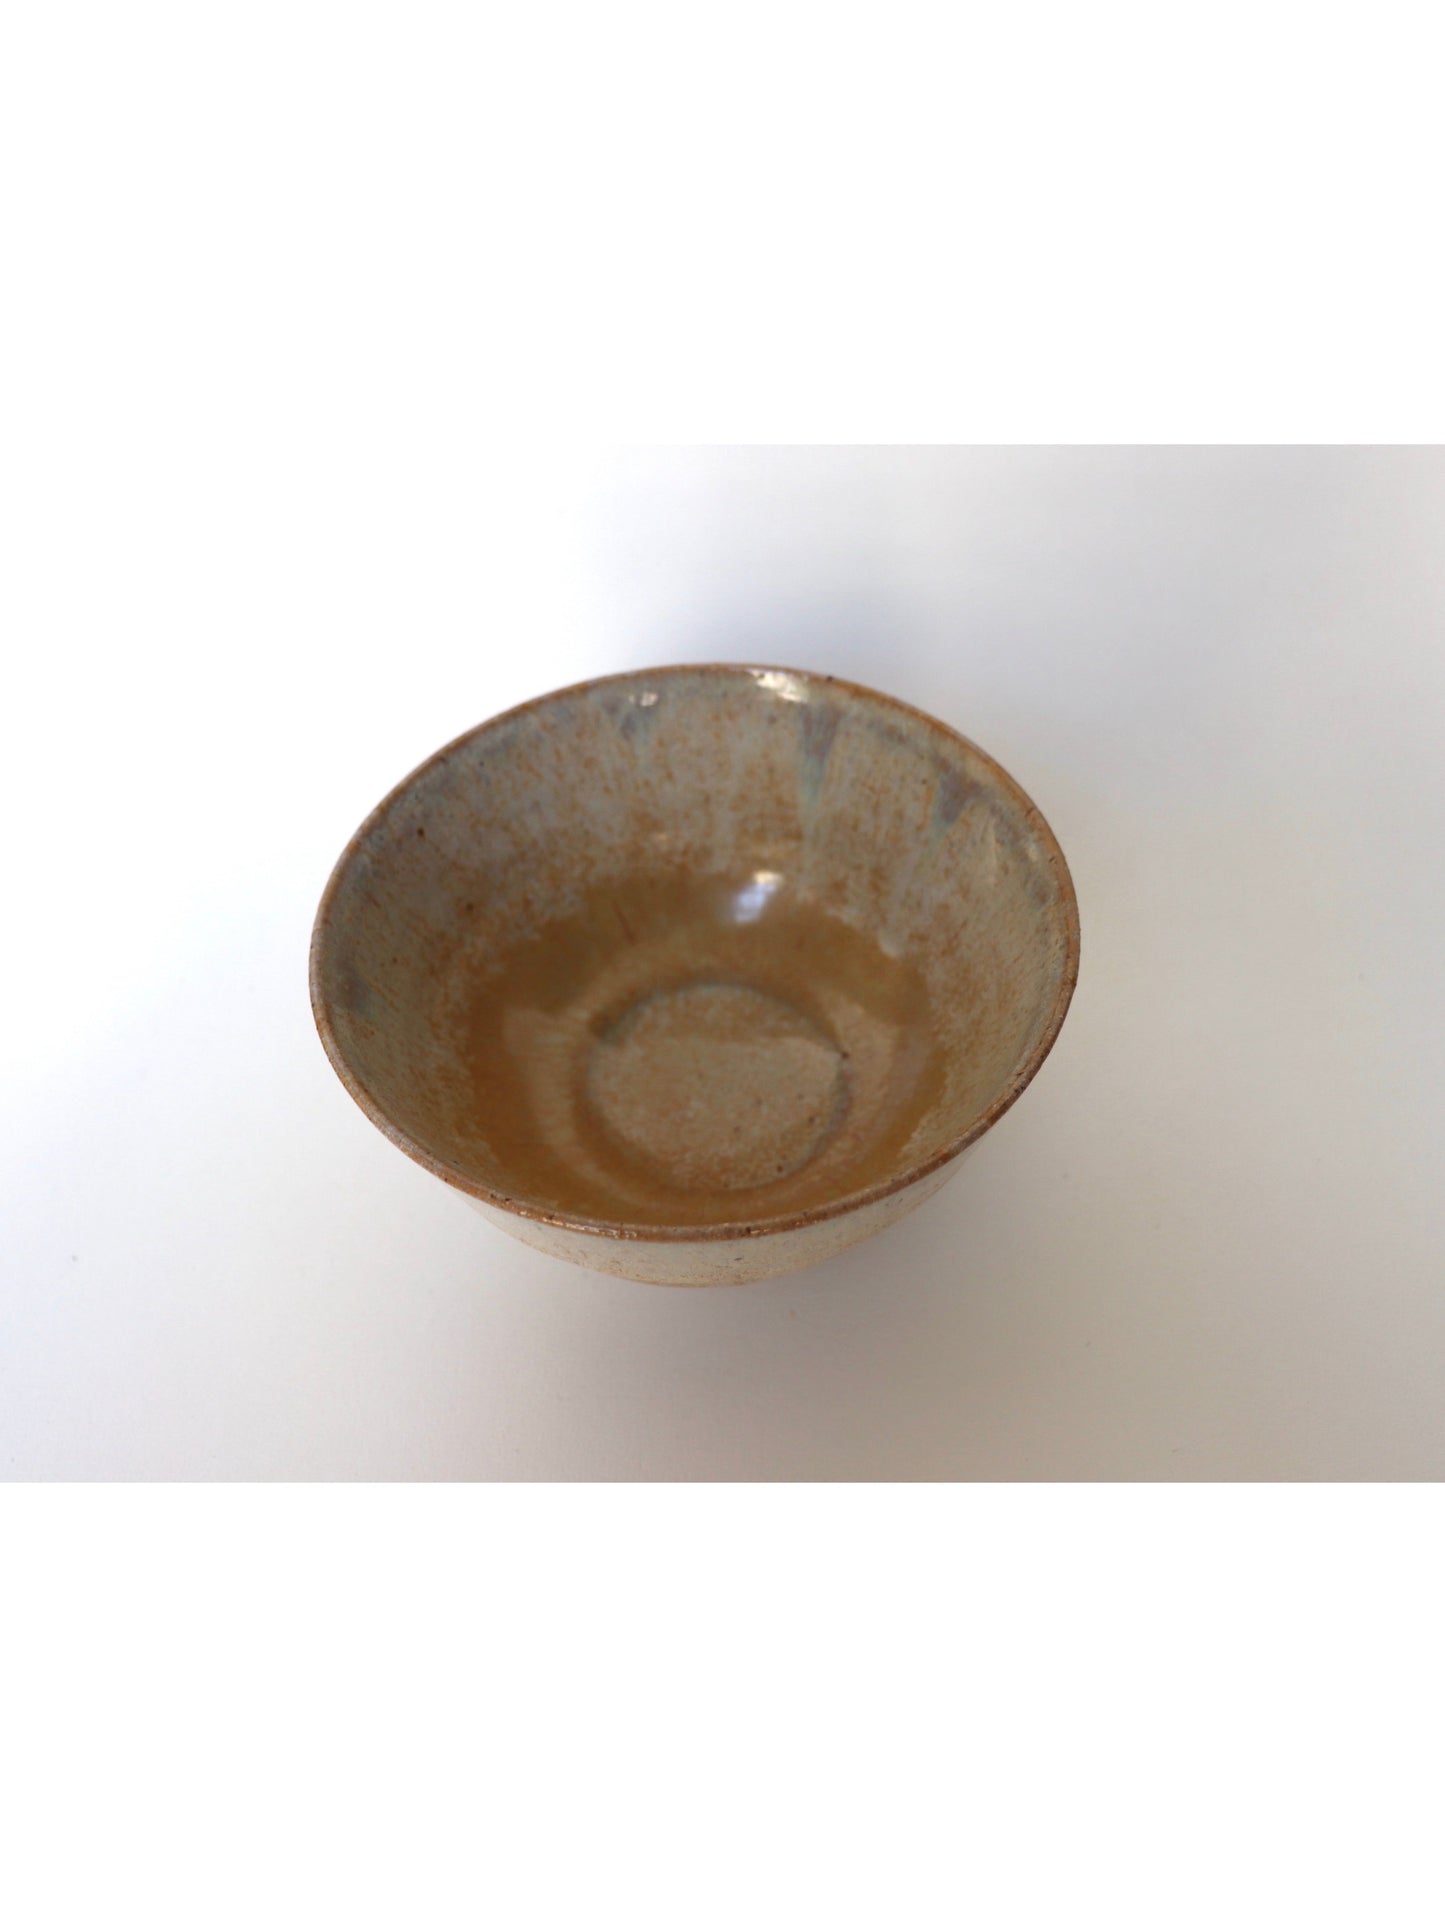 Matcha bowl / Mino-yaki Koubei "Shizenyu"